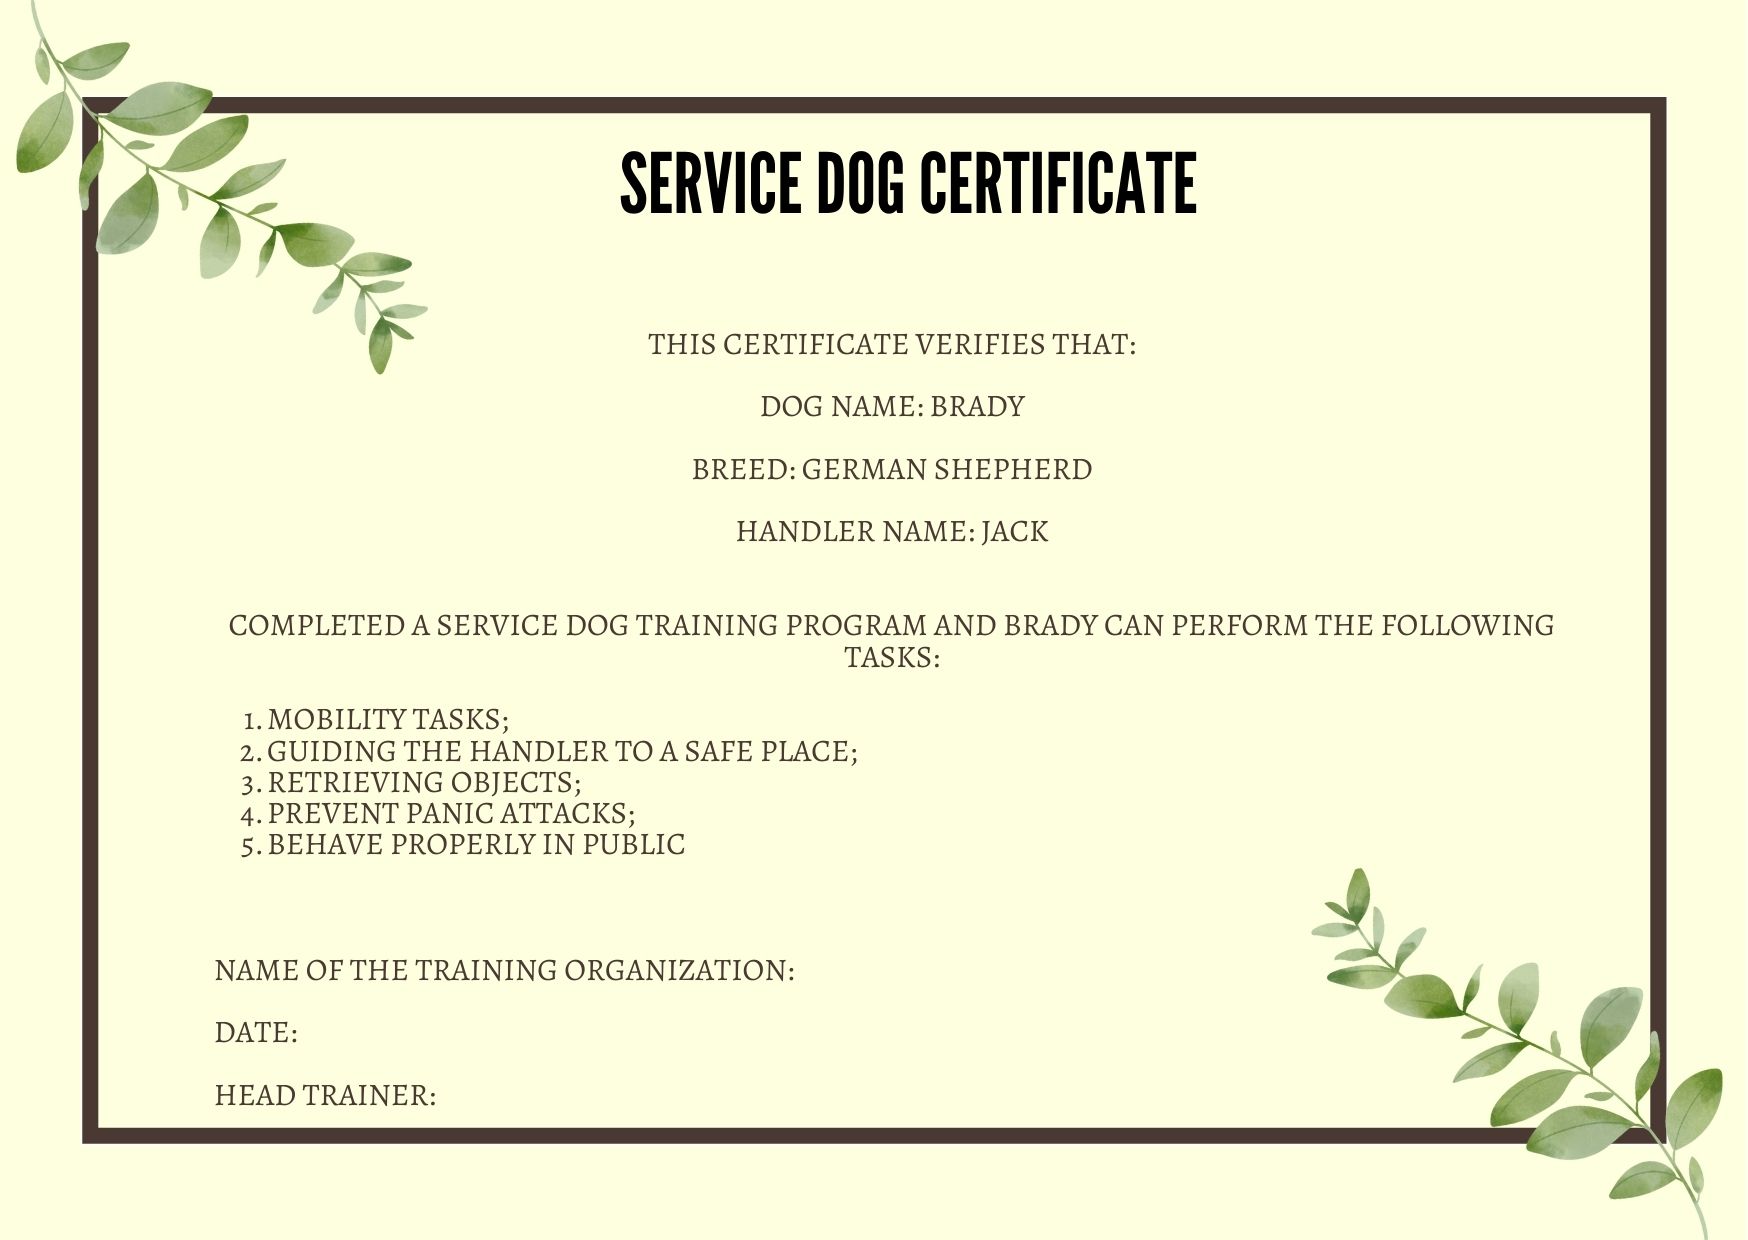 How to Get a Legitimate Service Dog Certificate